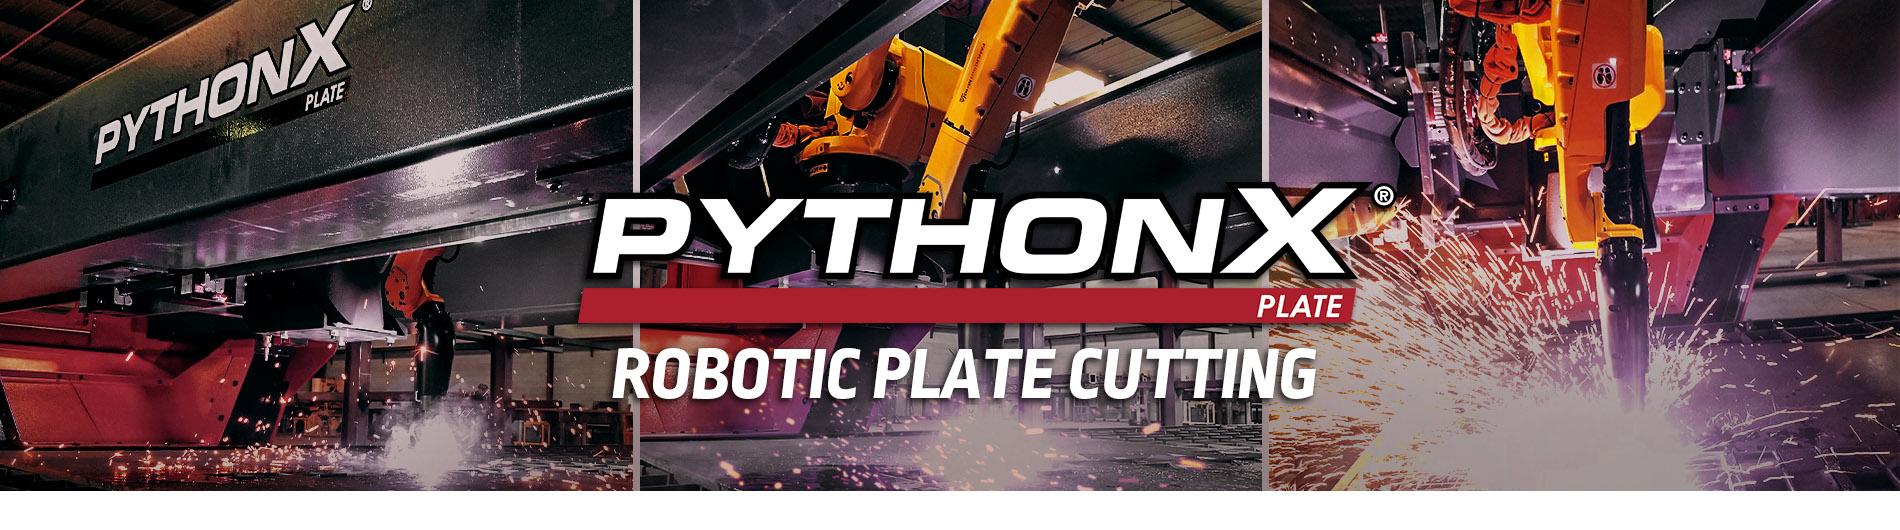 PythonxPlate